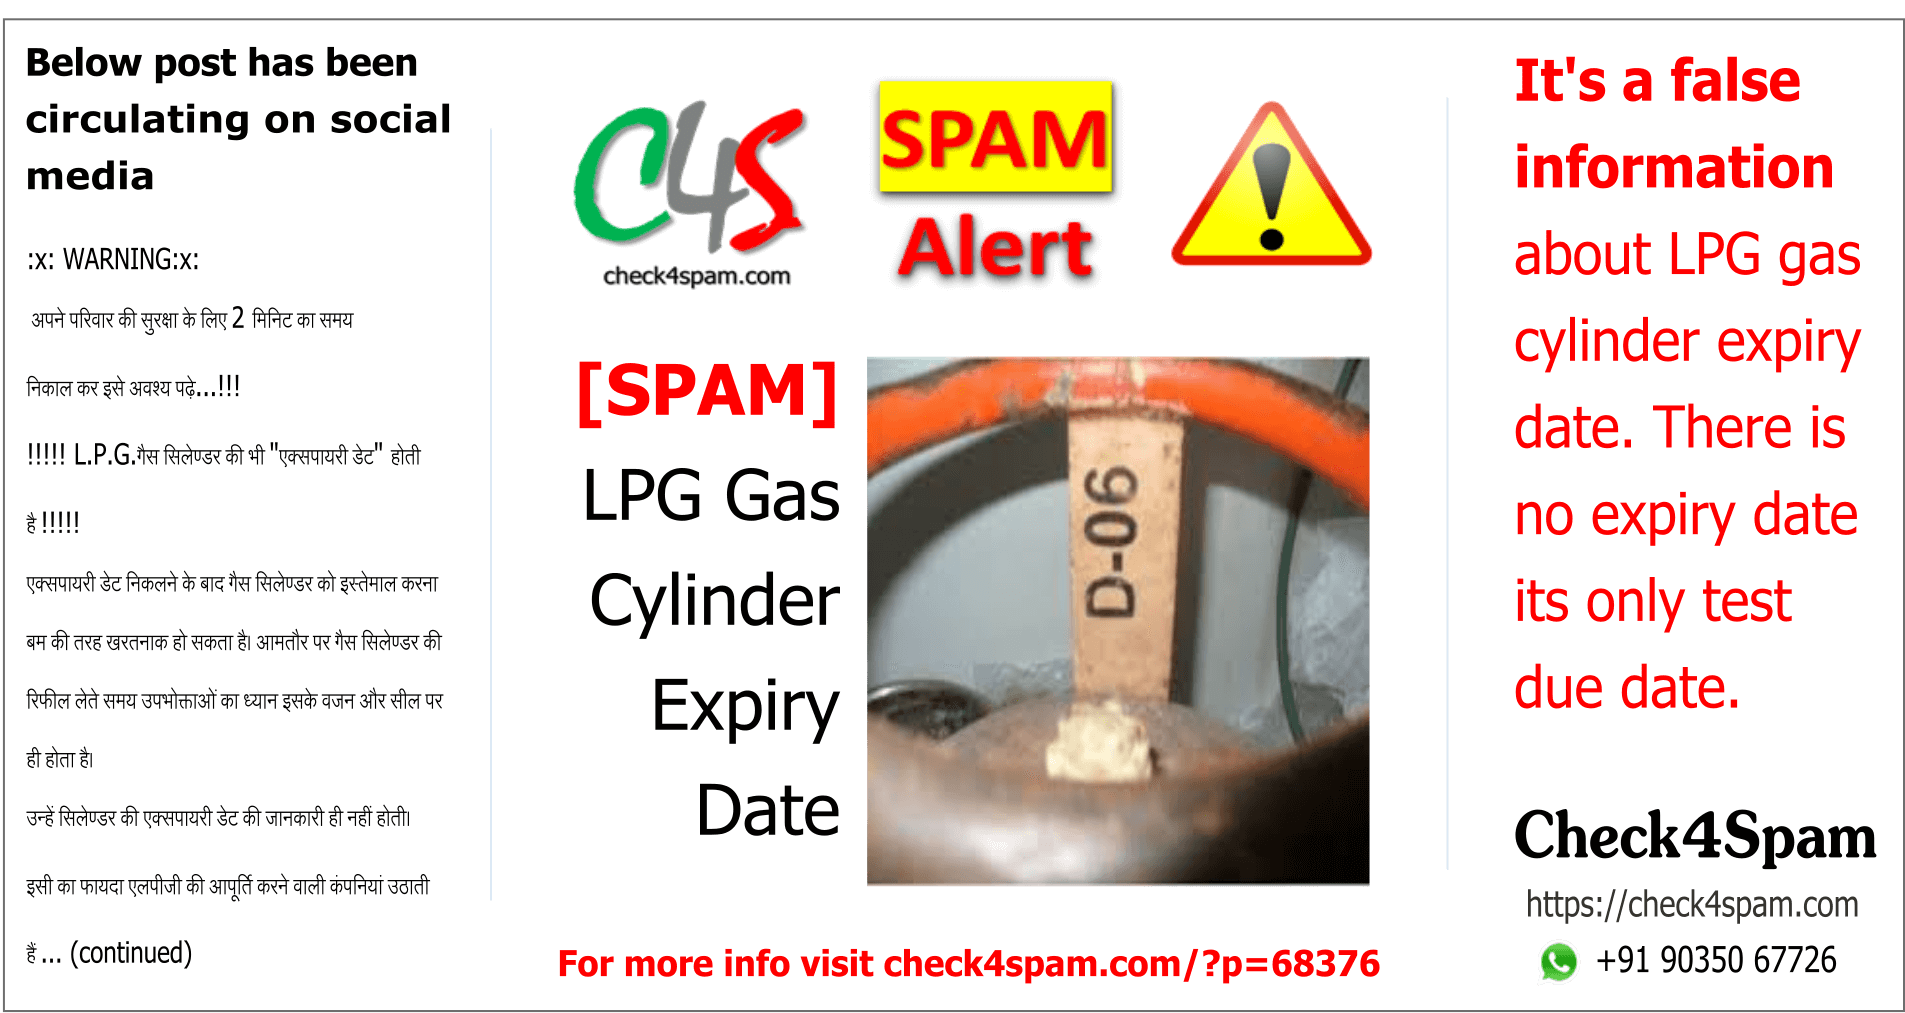 LPG Gas Cylinder Expiry Date - SPAM